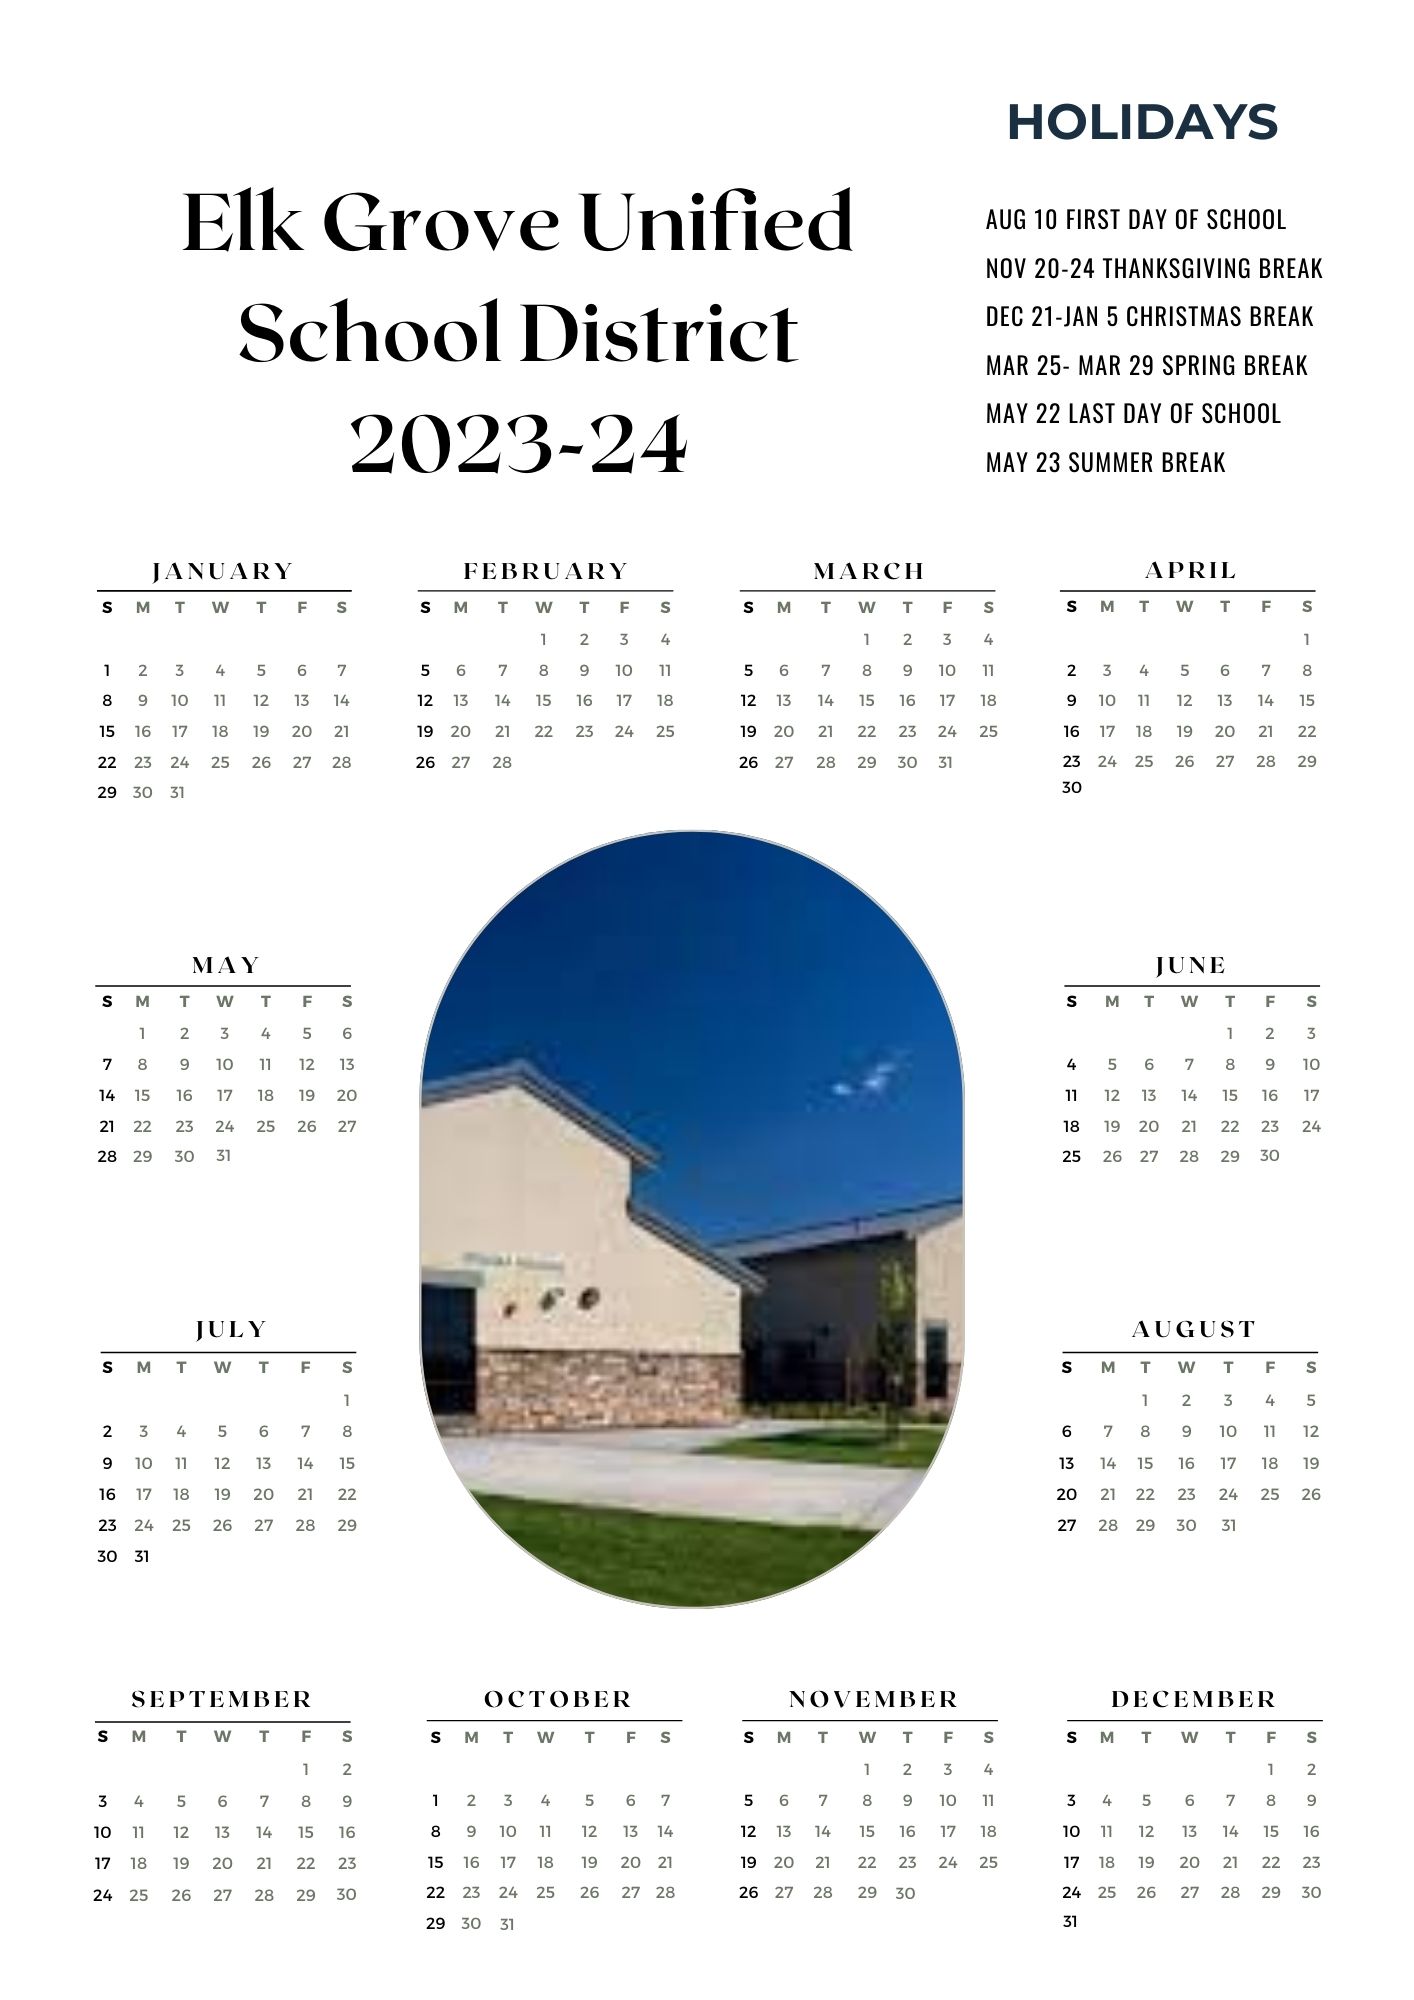 Elk Grove Unified School District Calendar Holidays 2023 2024